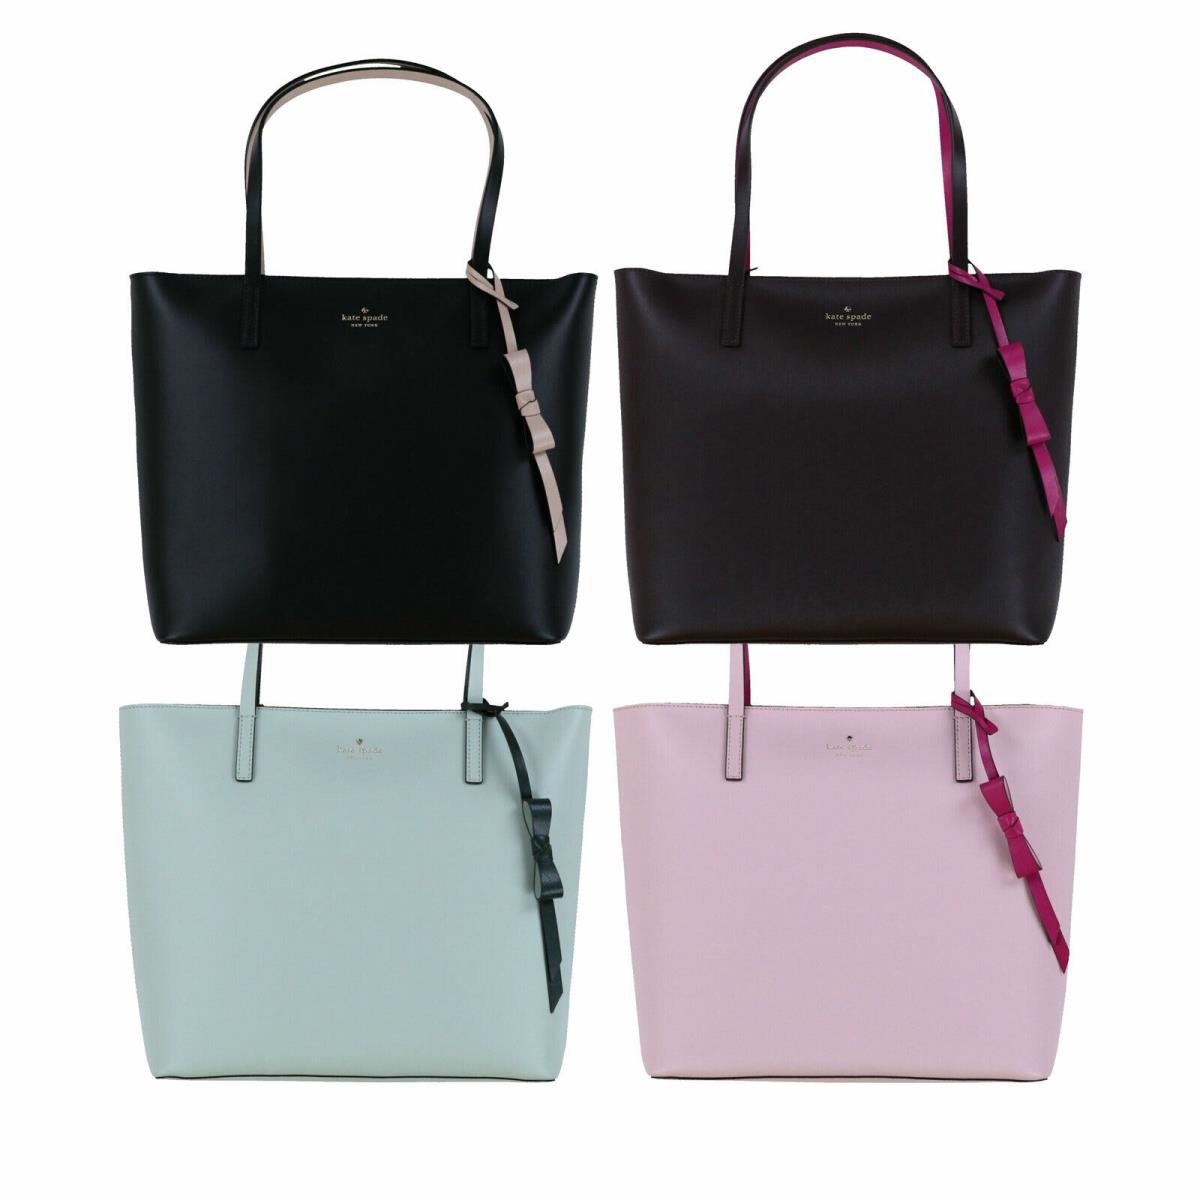 Kate Spade New York Lawton Way Rose Tote Large Purse Handbag Leather Bag New